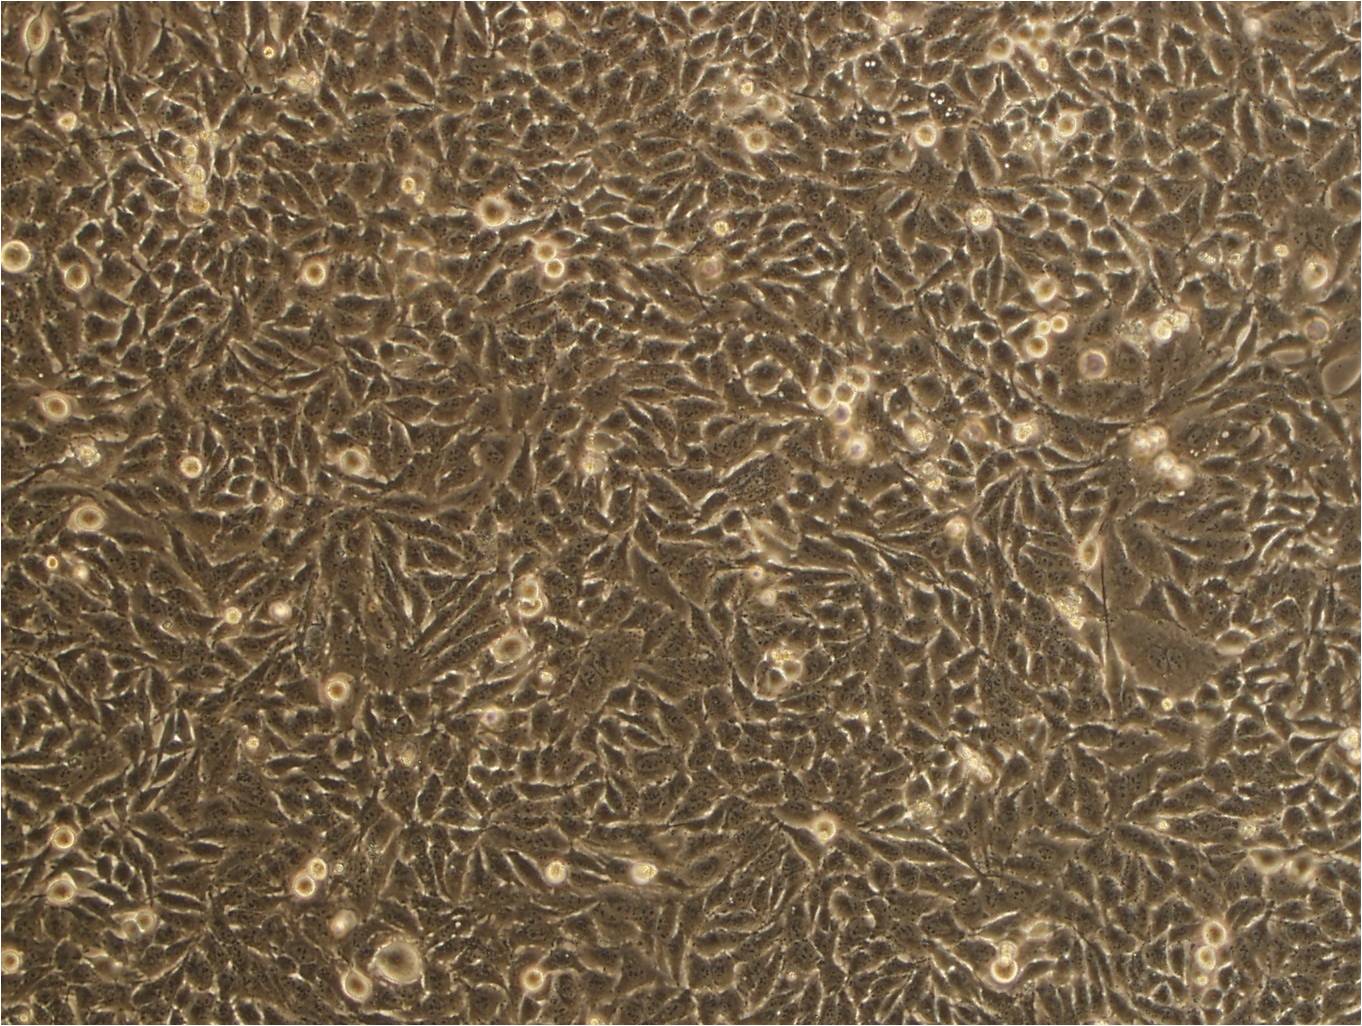 KTCTL-140 Cells(赠送Str鉴定报告)|人肾透明细胞癌细胞,KTCTL-140 Cells